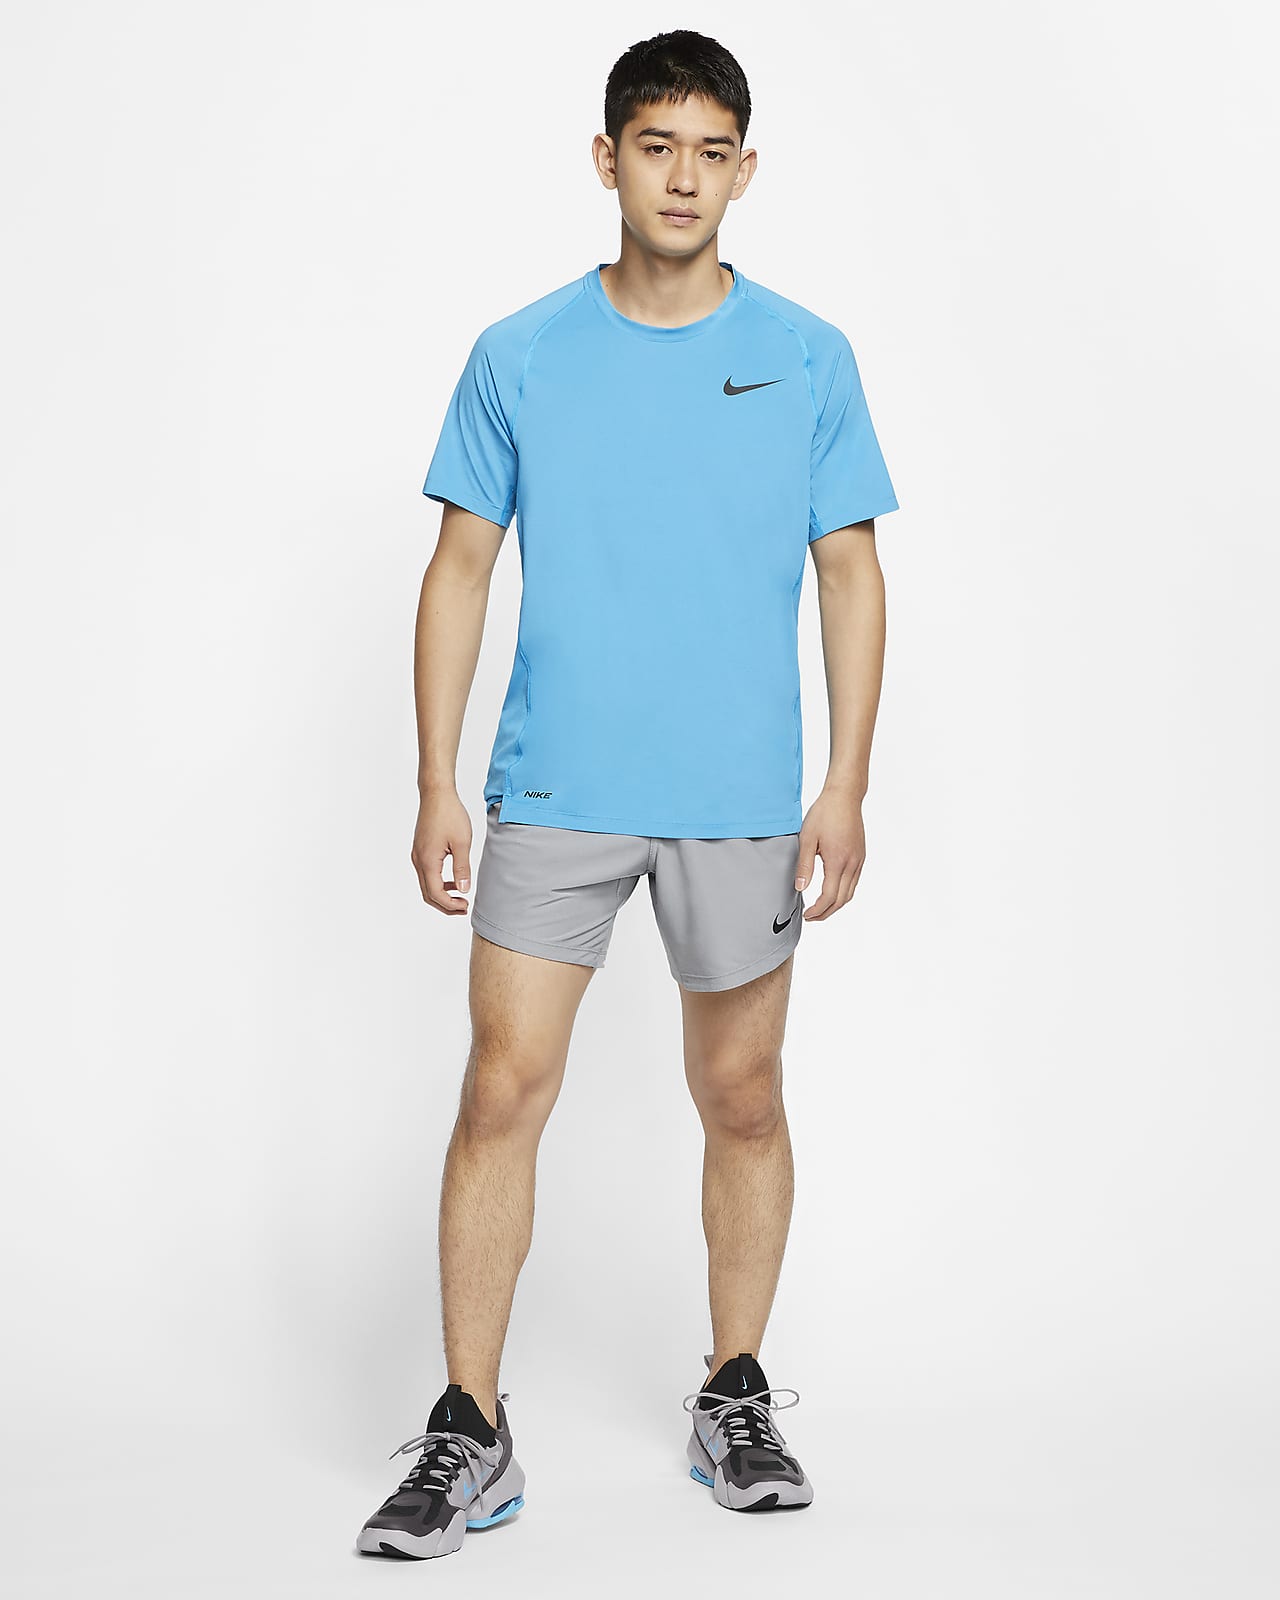 Nike公式 ナイキ プロ メンズショートパンツ オンラインストア 通販サイト